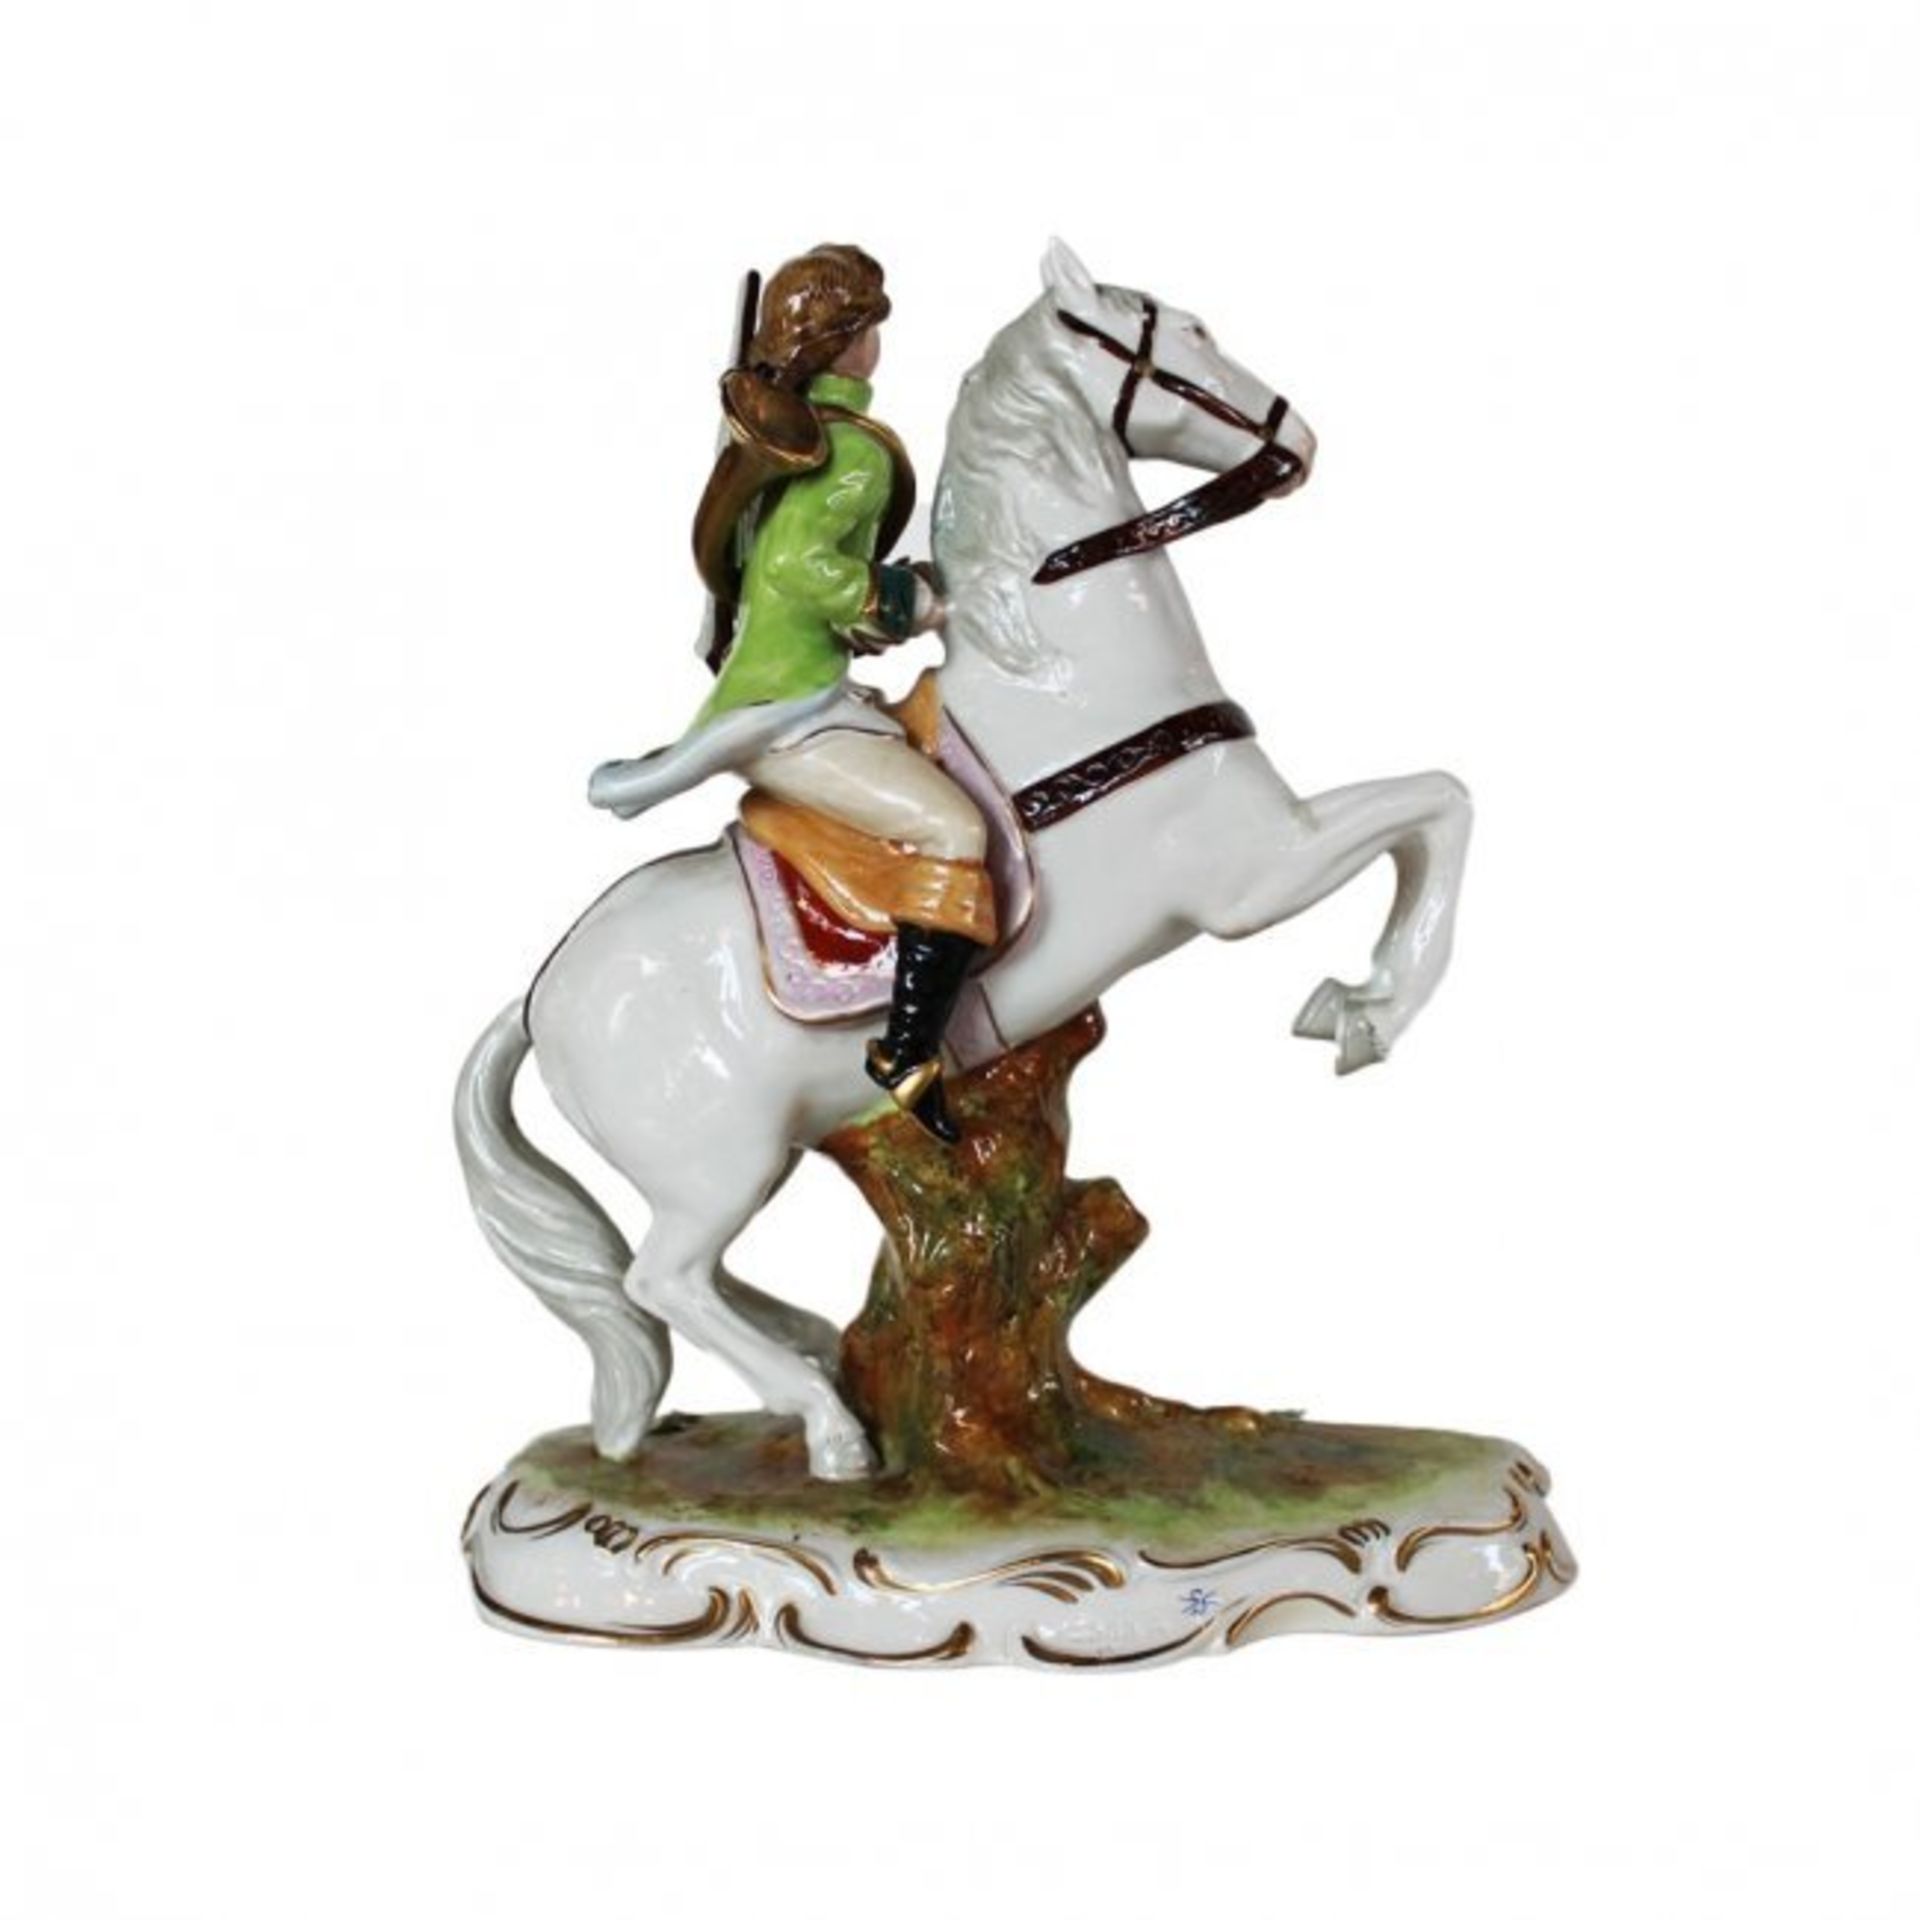 Kister, Scheibe-Alsbach porcelain figurine “Rider" - Image 2 of 2